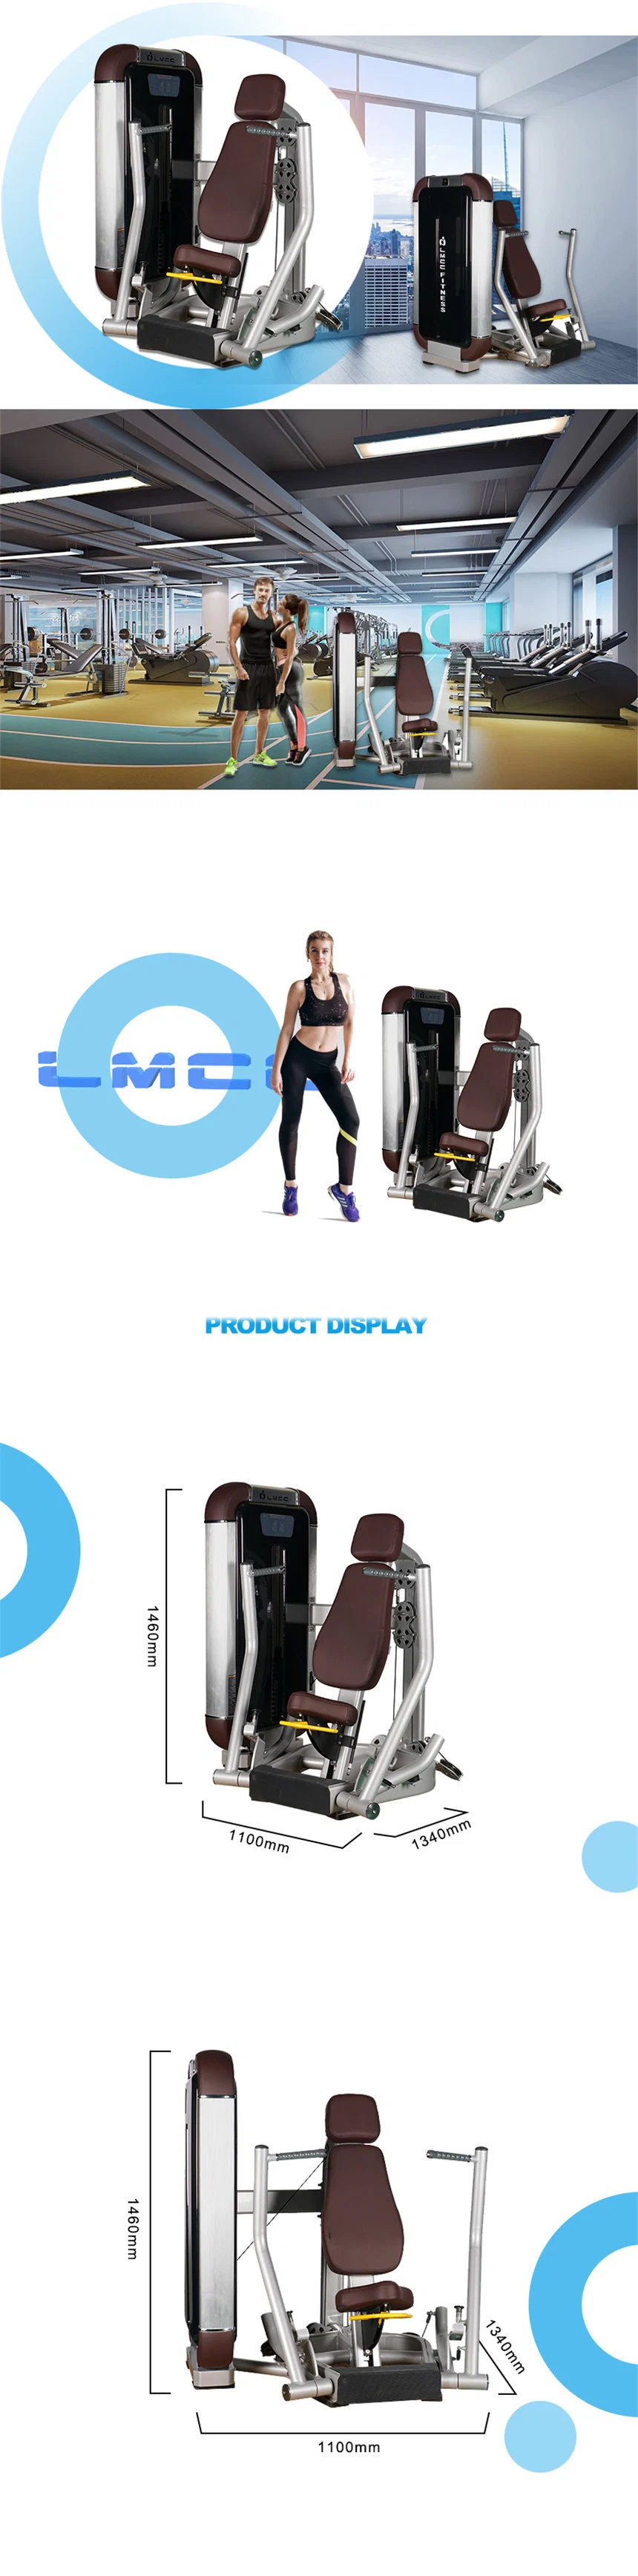 Lmcc Gym Fitness Strength Equipment Professional Chest Press Machine Commercial Gym Equipment